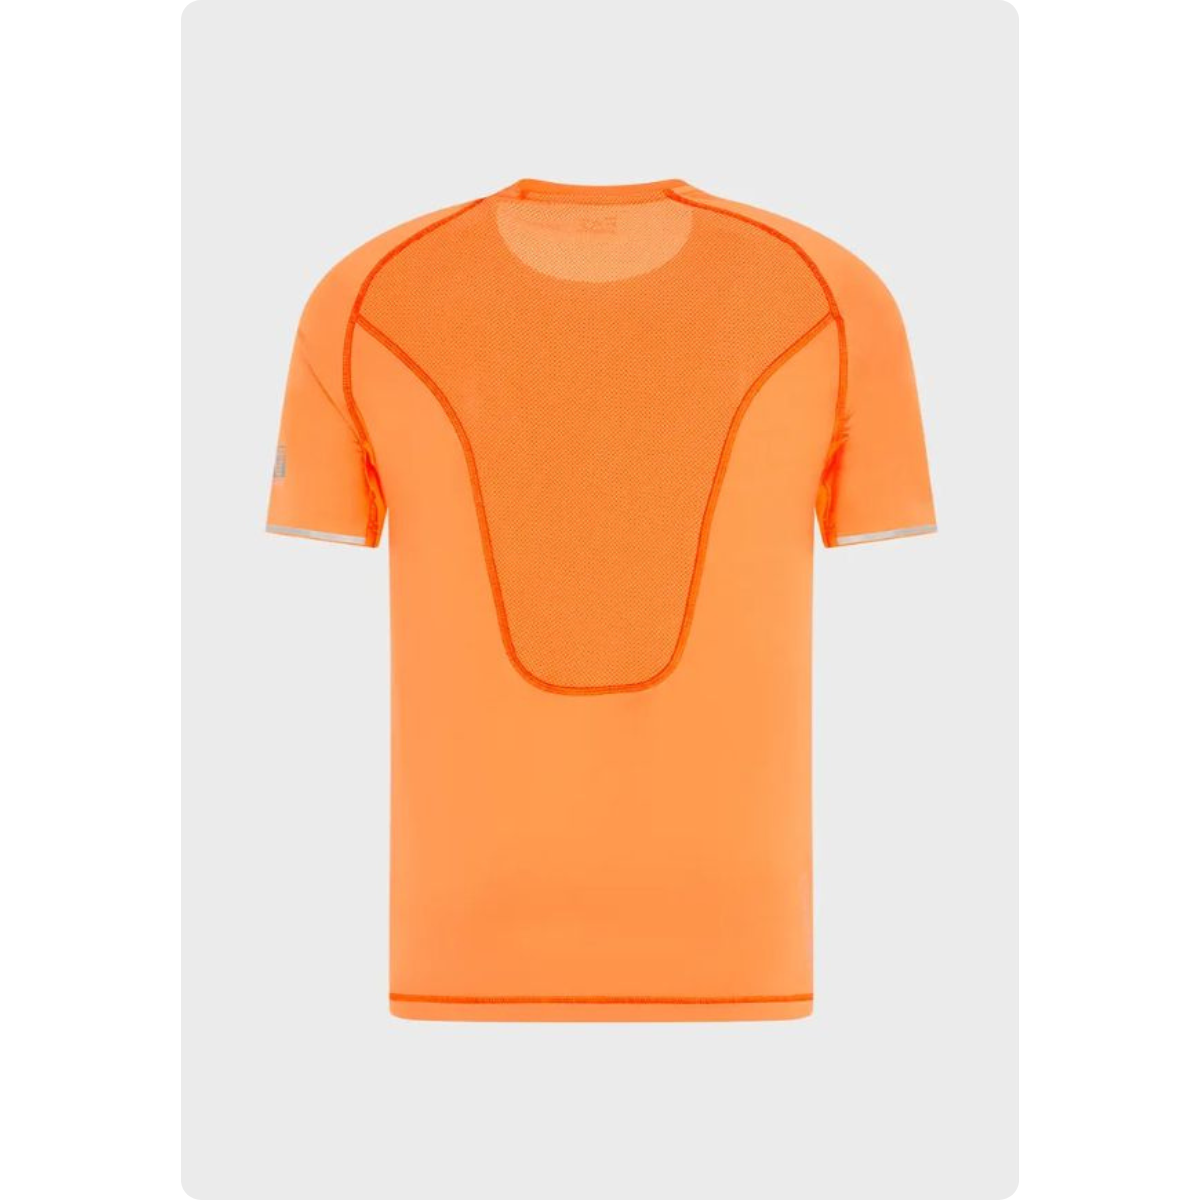 EA7 Giorgio Armani - Man Jersey T-Shirt - Oxford Tan